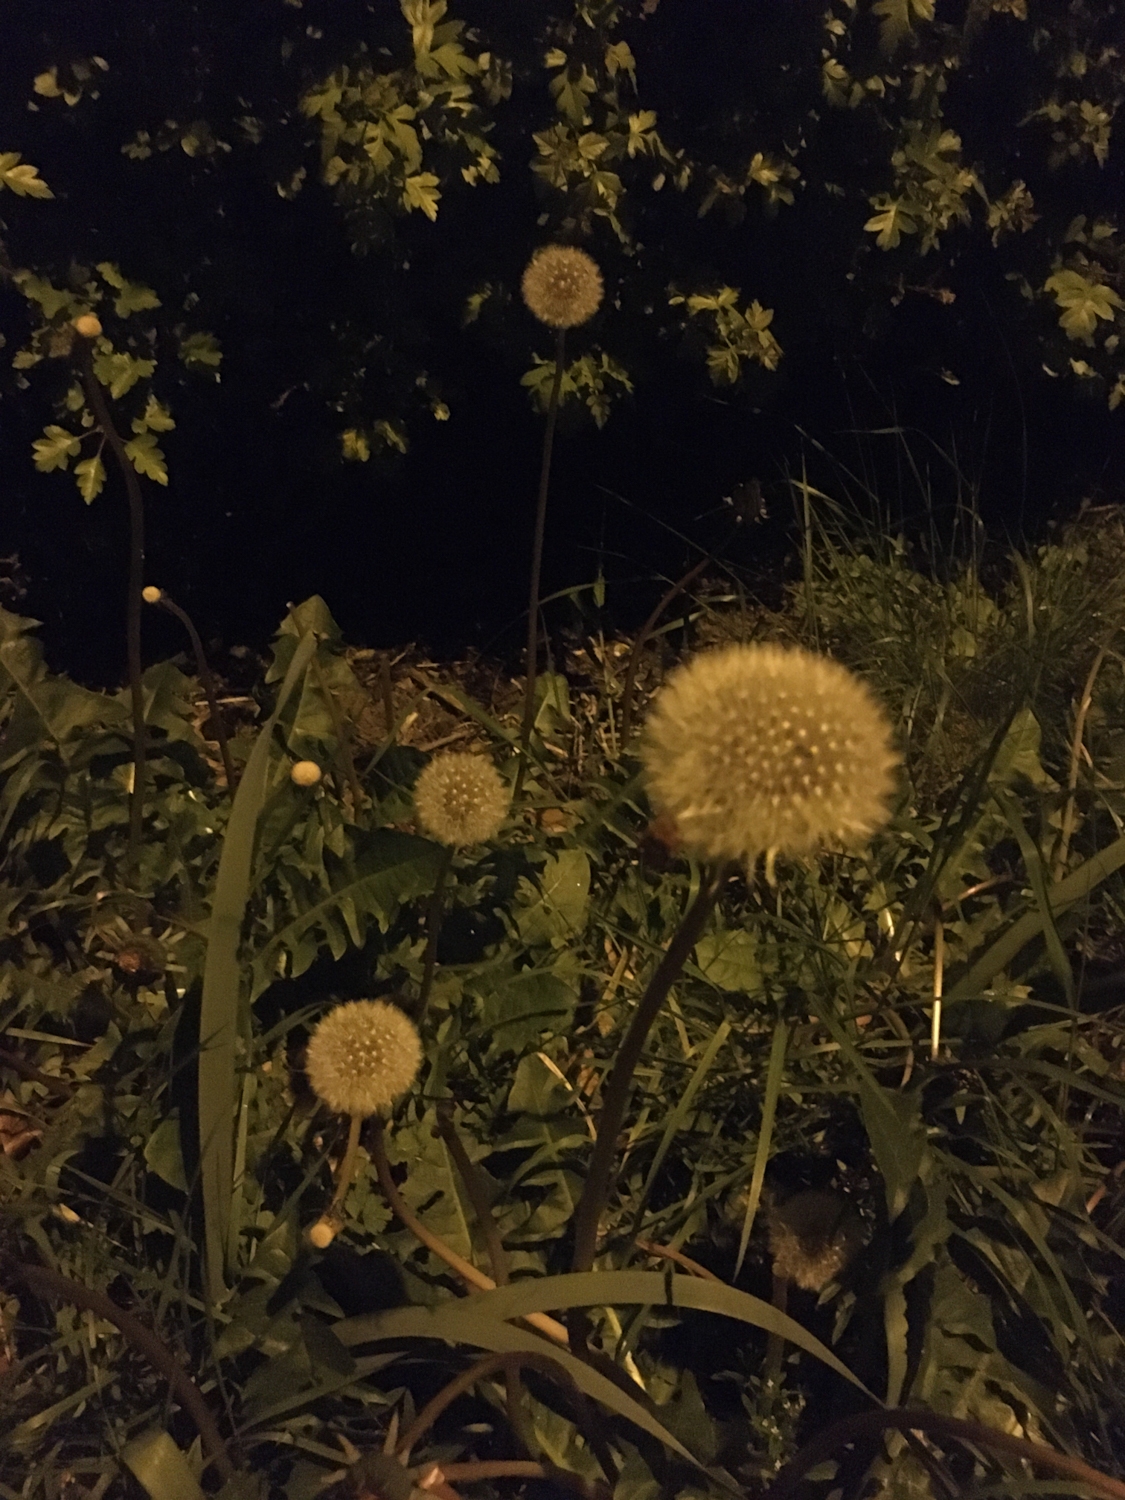 Nighttime dandelions